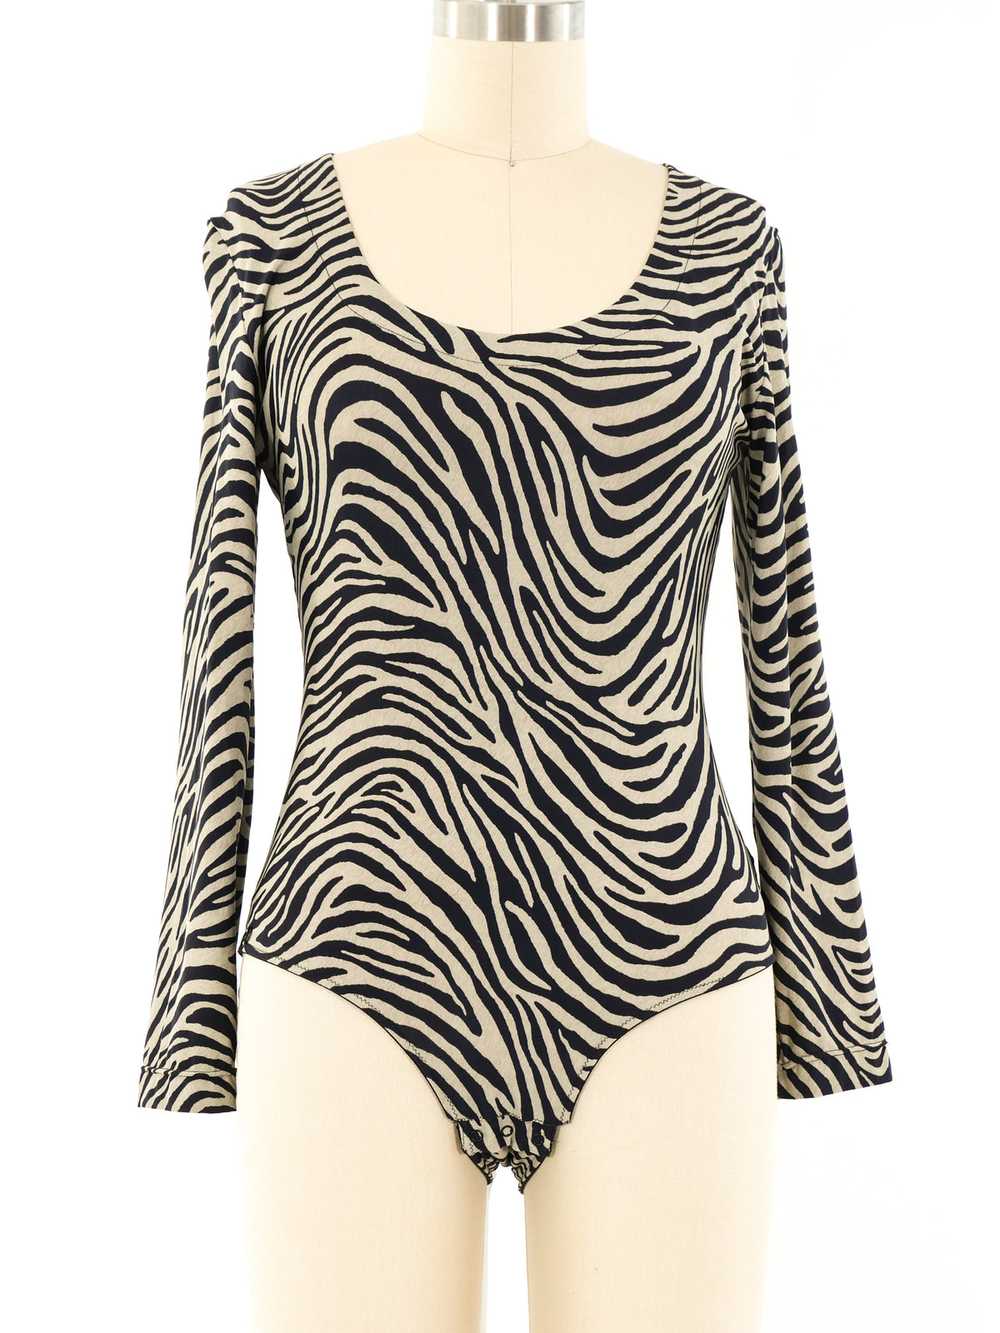 Christian Dior Zebra Print Bodysuit - image 1